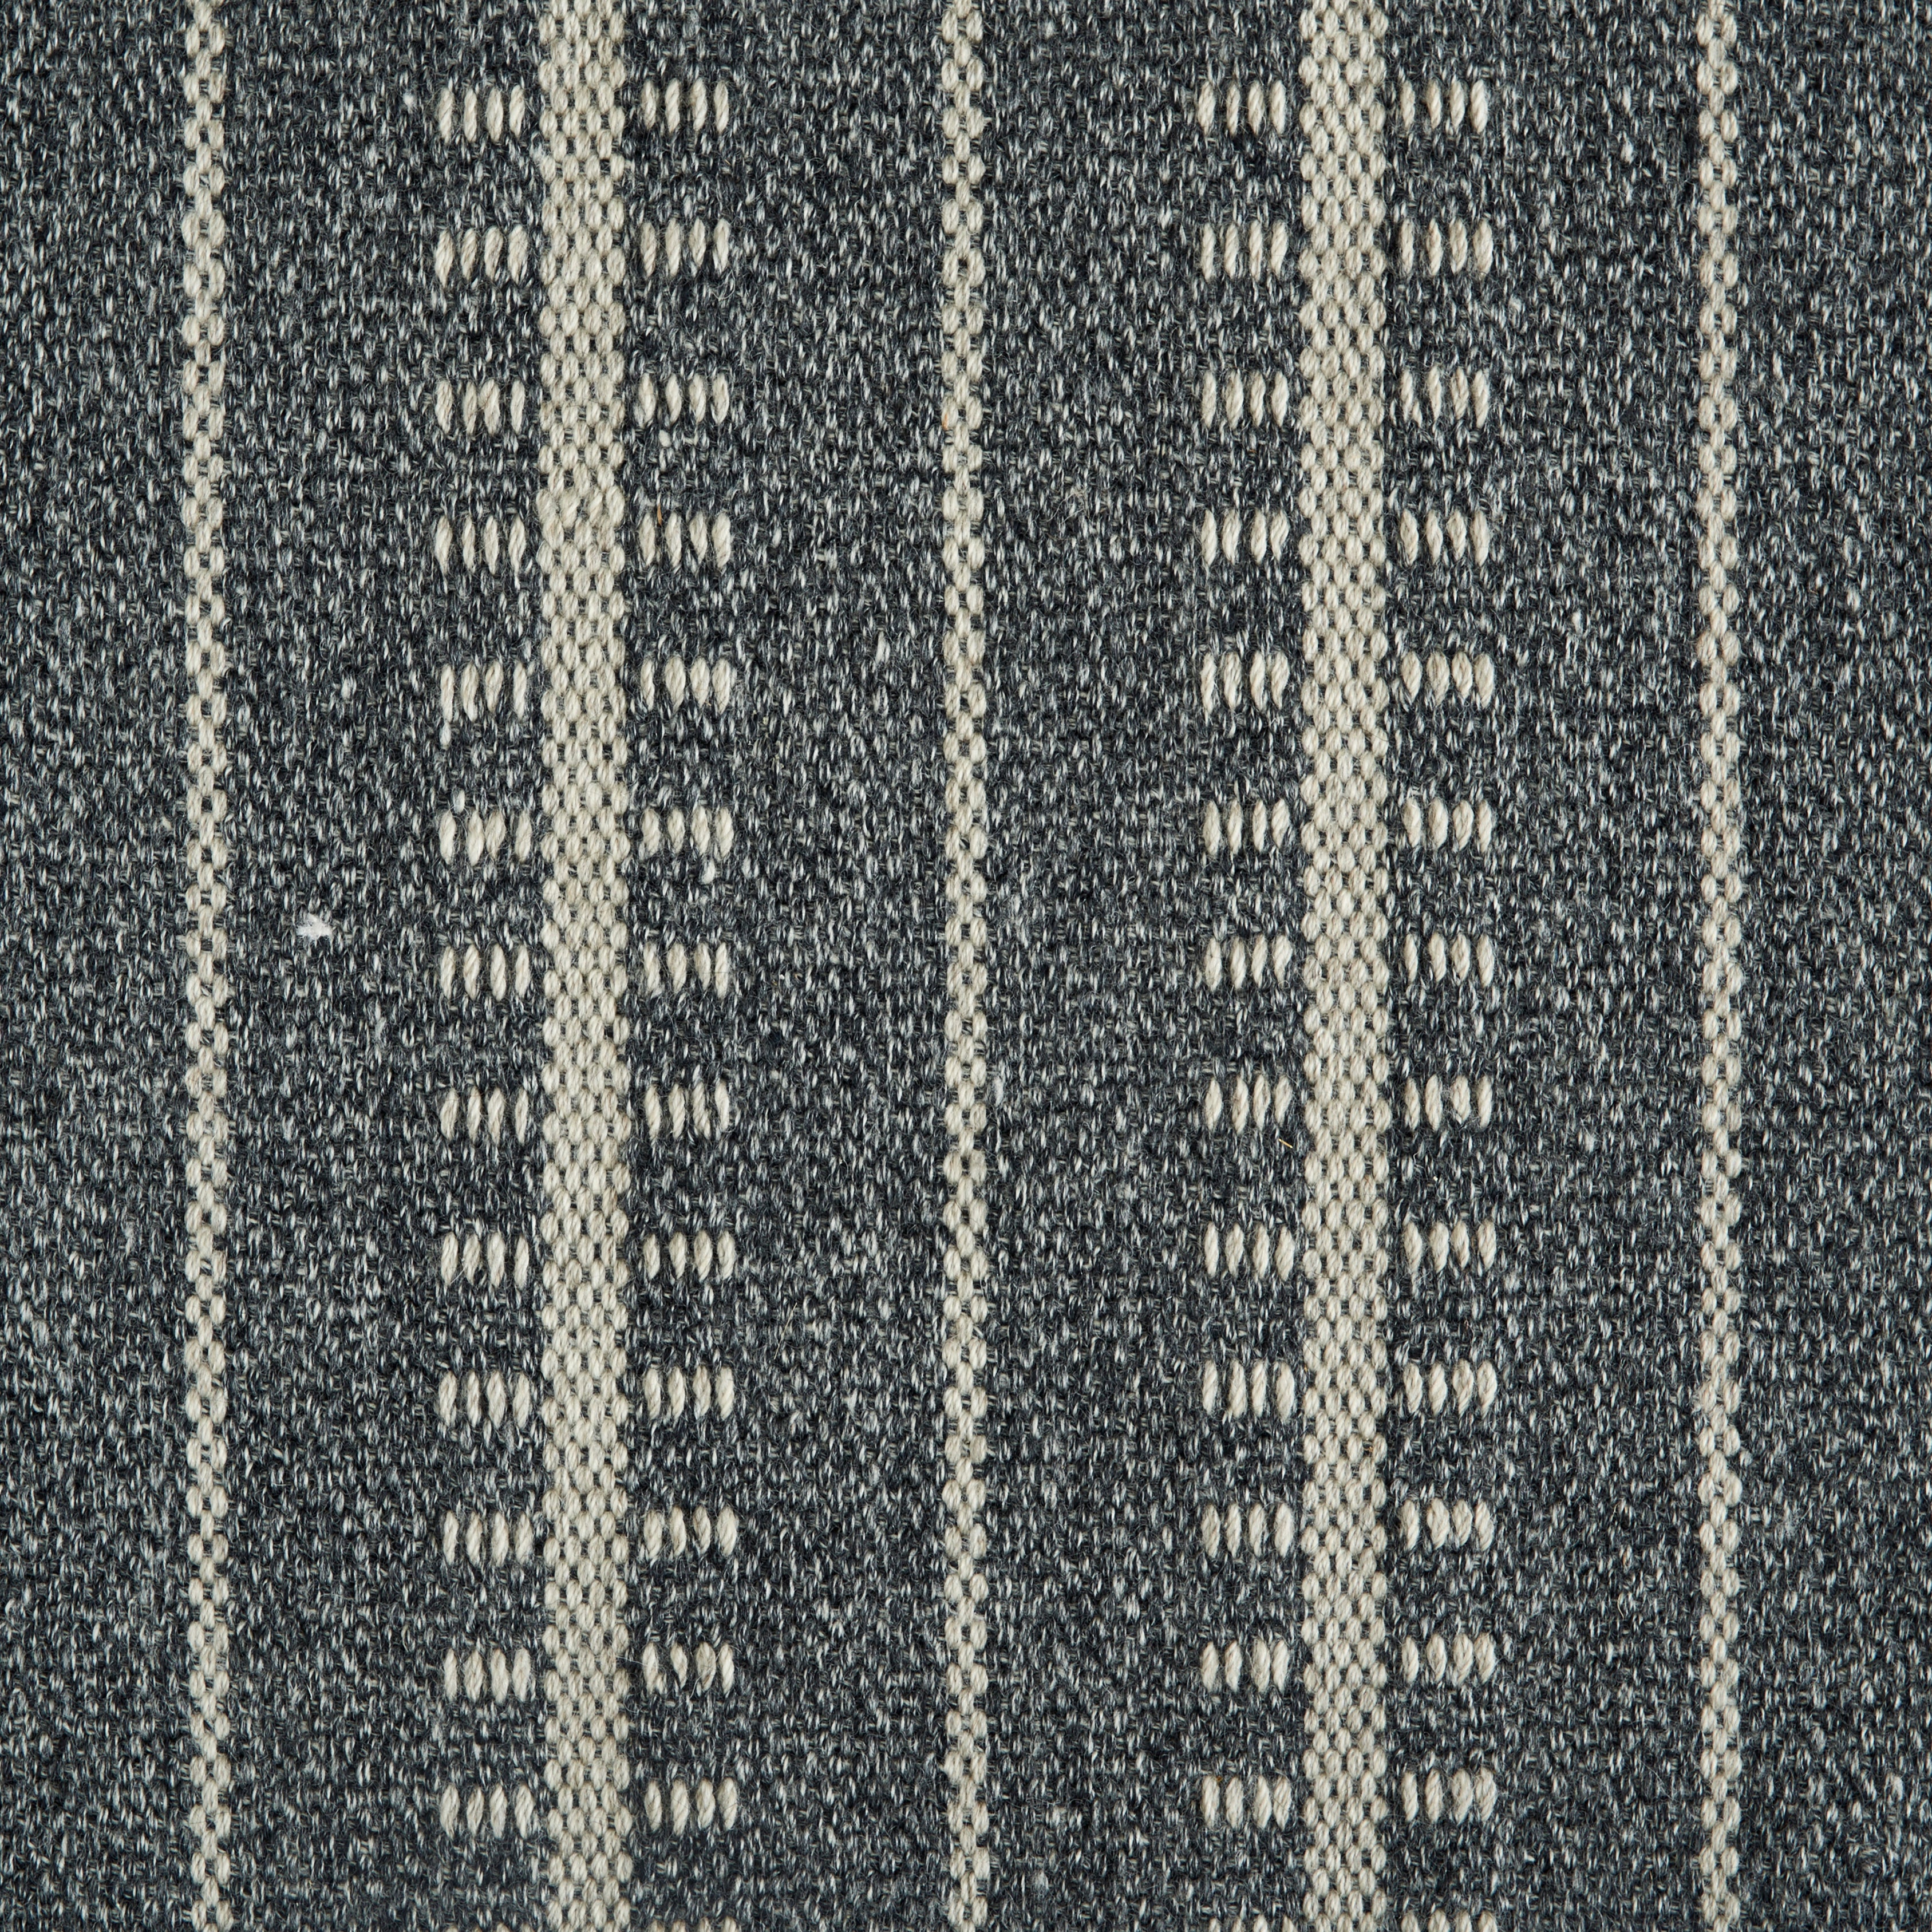 Wool broadloom carpet swatch in a ticked stripe weave in dark navy and cream.